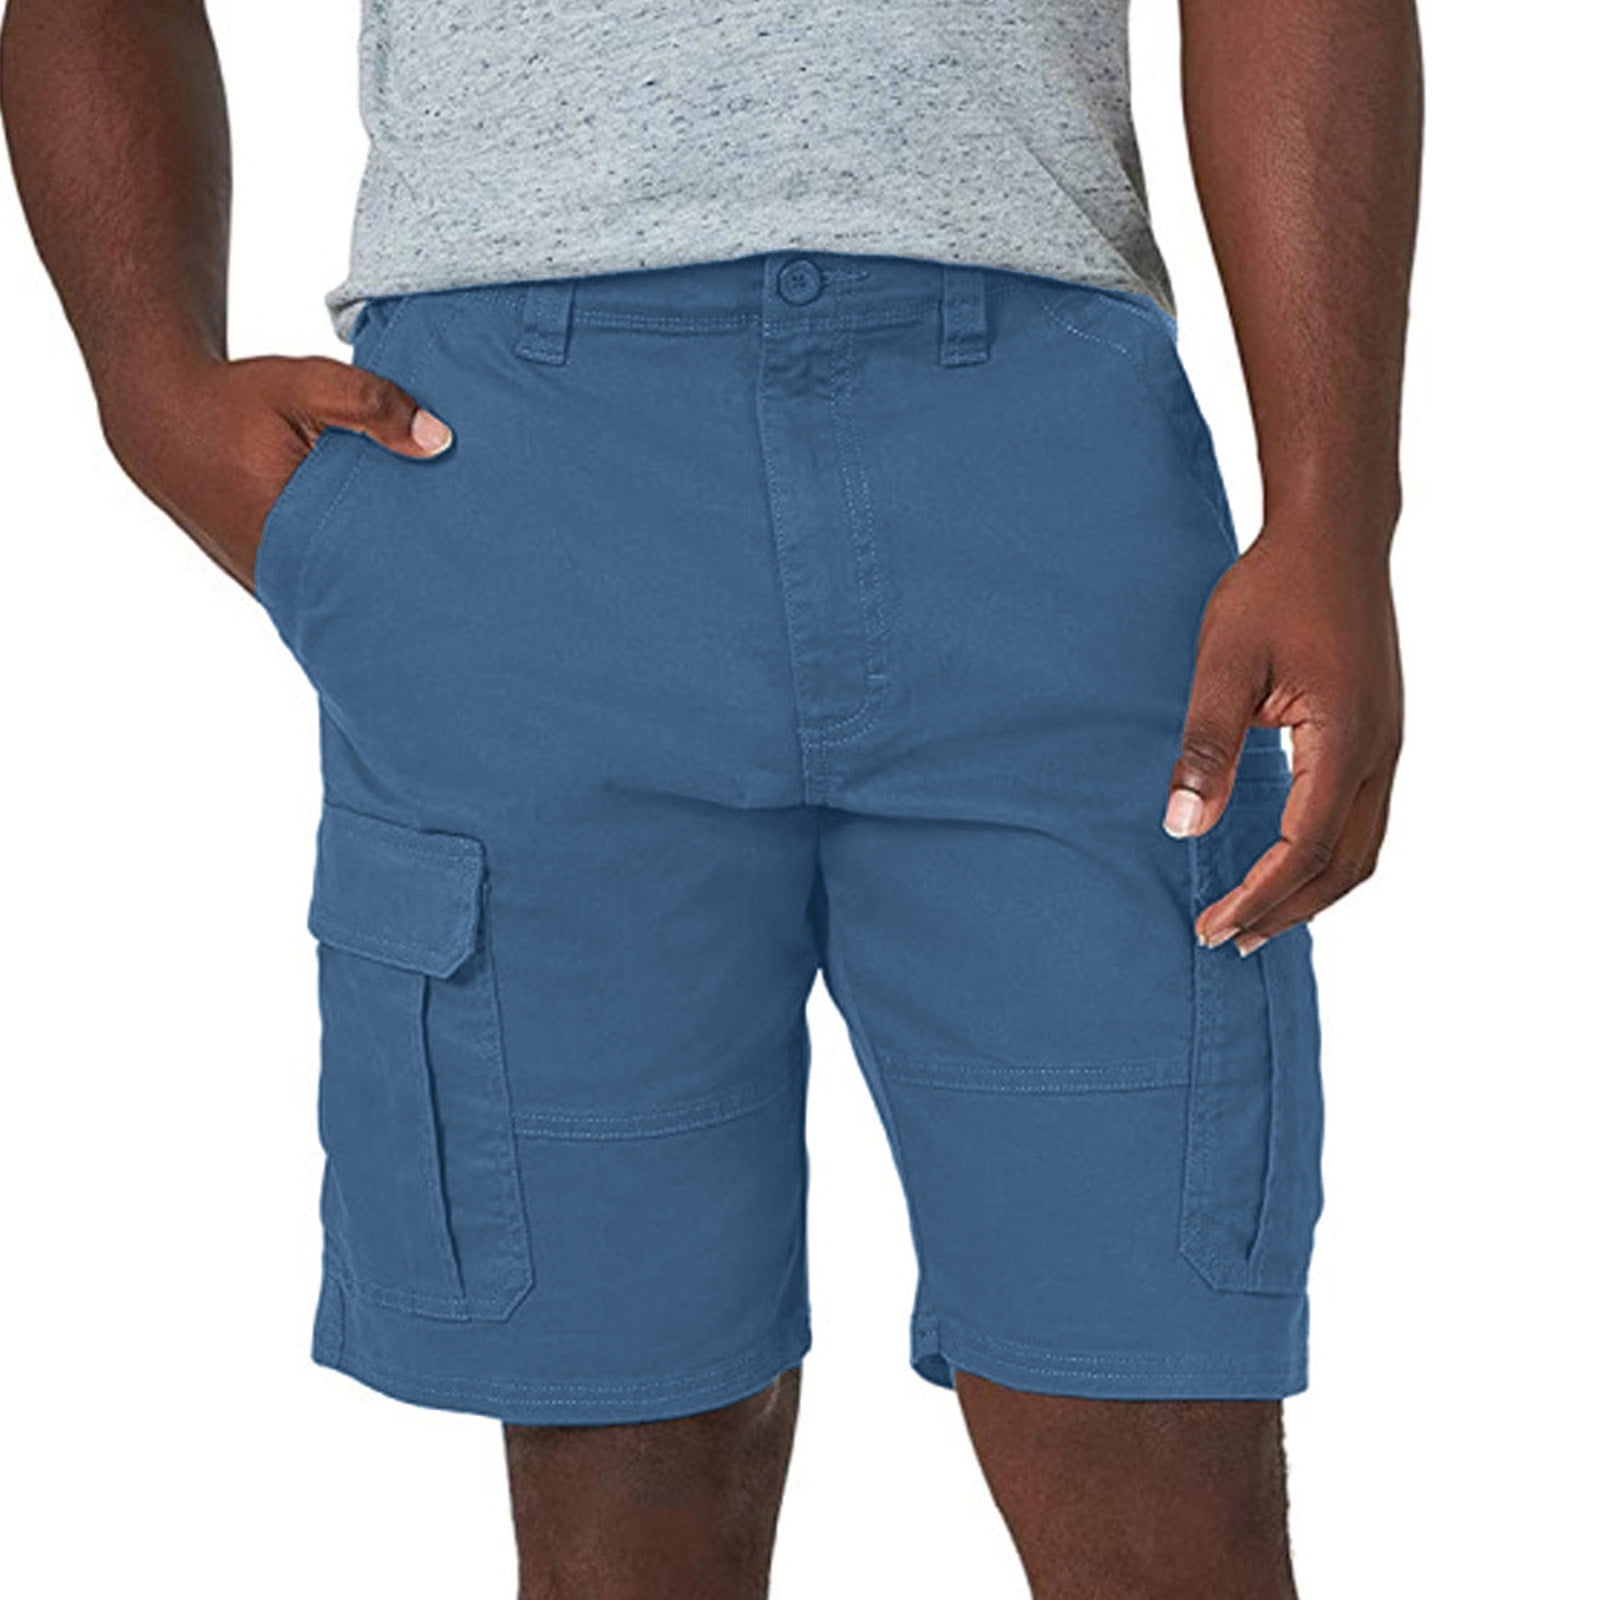 Meitianfacai Men Shorts Gifts for Dad Fashion Men's Pocket Zipper  Resilience Leisure Time Tooling Short Pants Blue